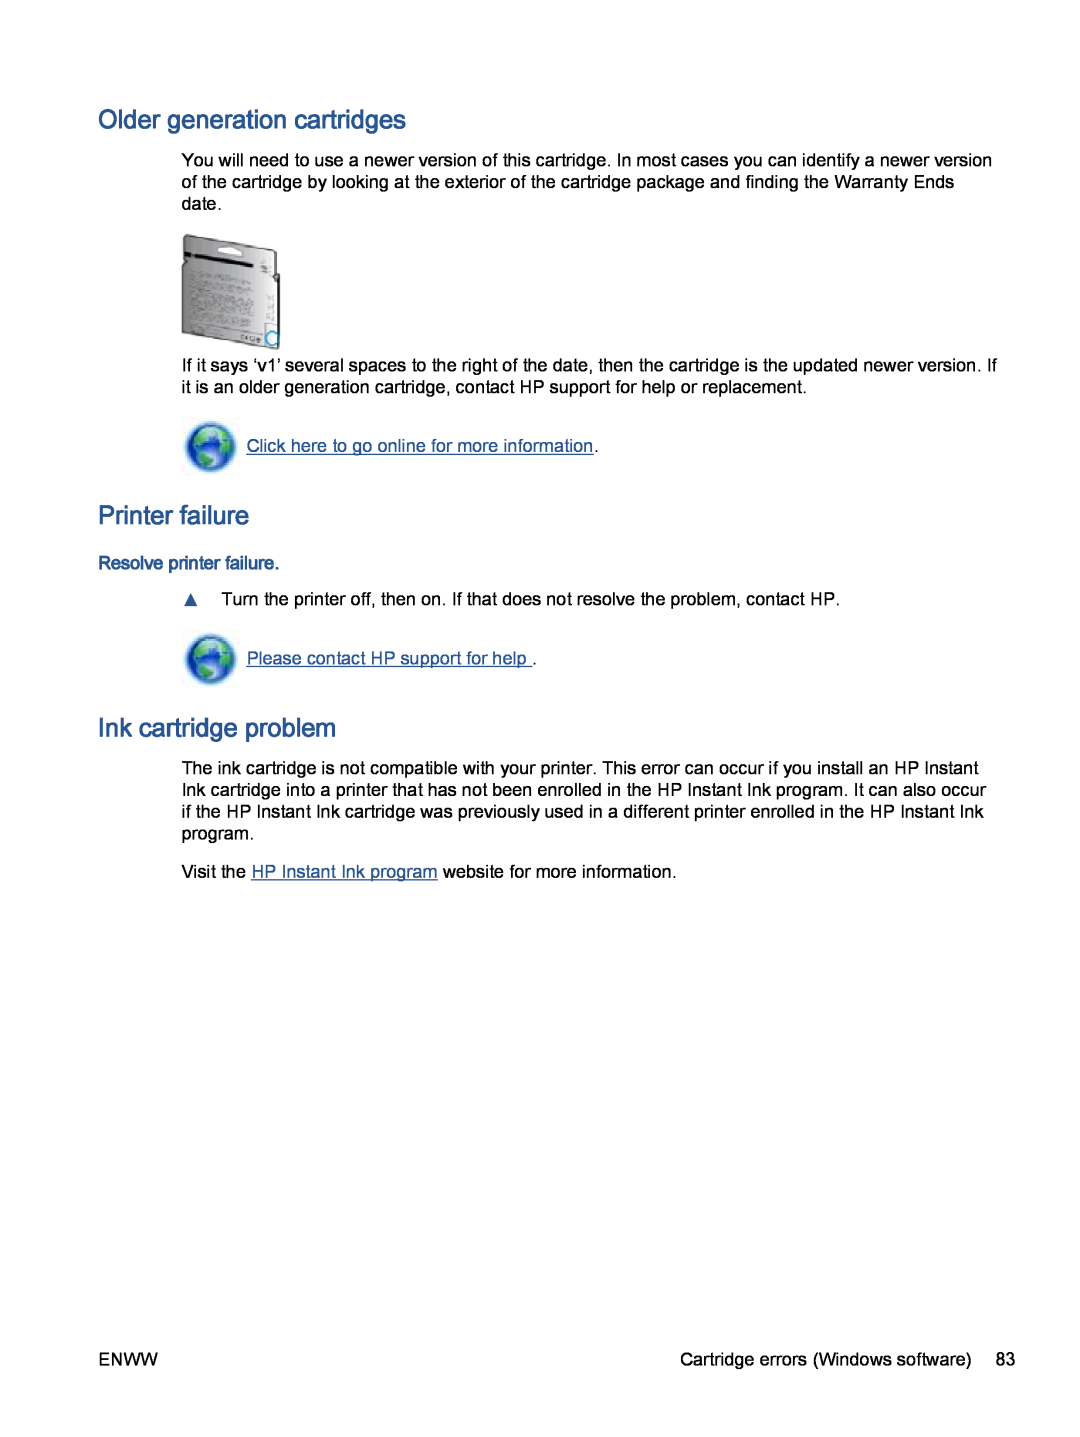 HP 5530 A9J40A#B1H manual Older generation cartridges, Printer failure, Ink cartridge problem, Resolve printer failure 